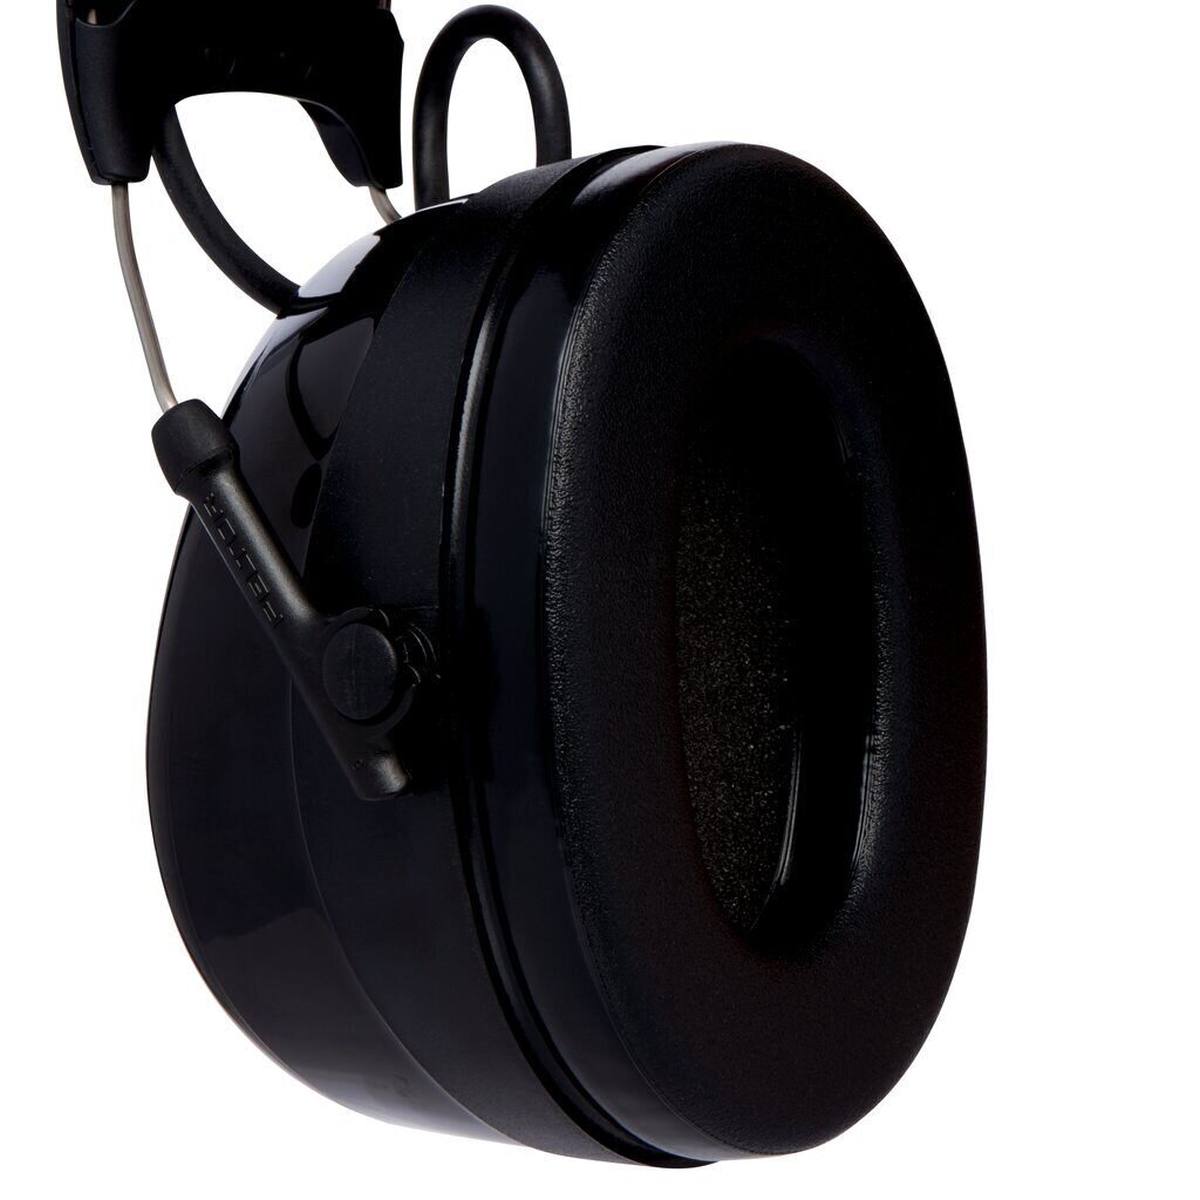 3M PELTOR Auricular de protección auditiva ProTac III, negro, diadema, SNR=32 dB, negro